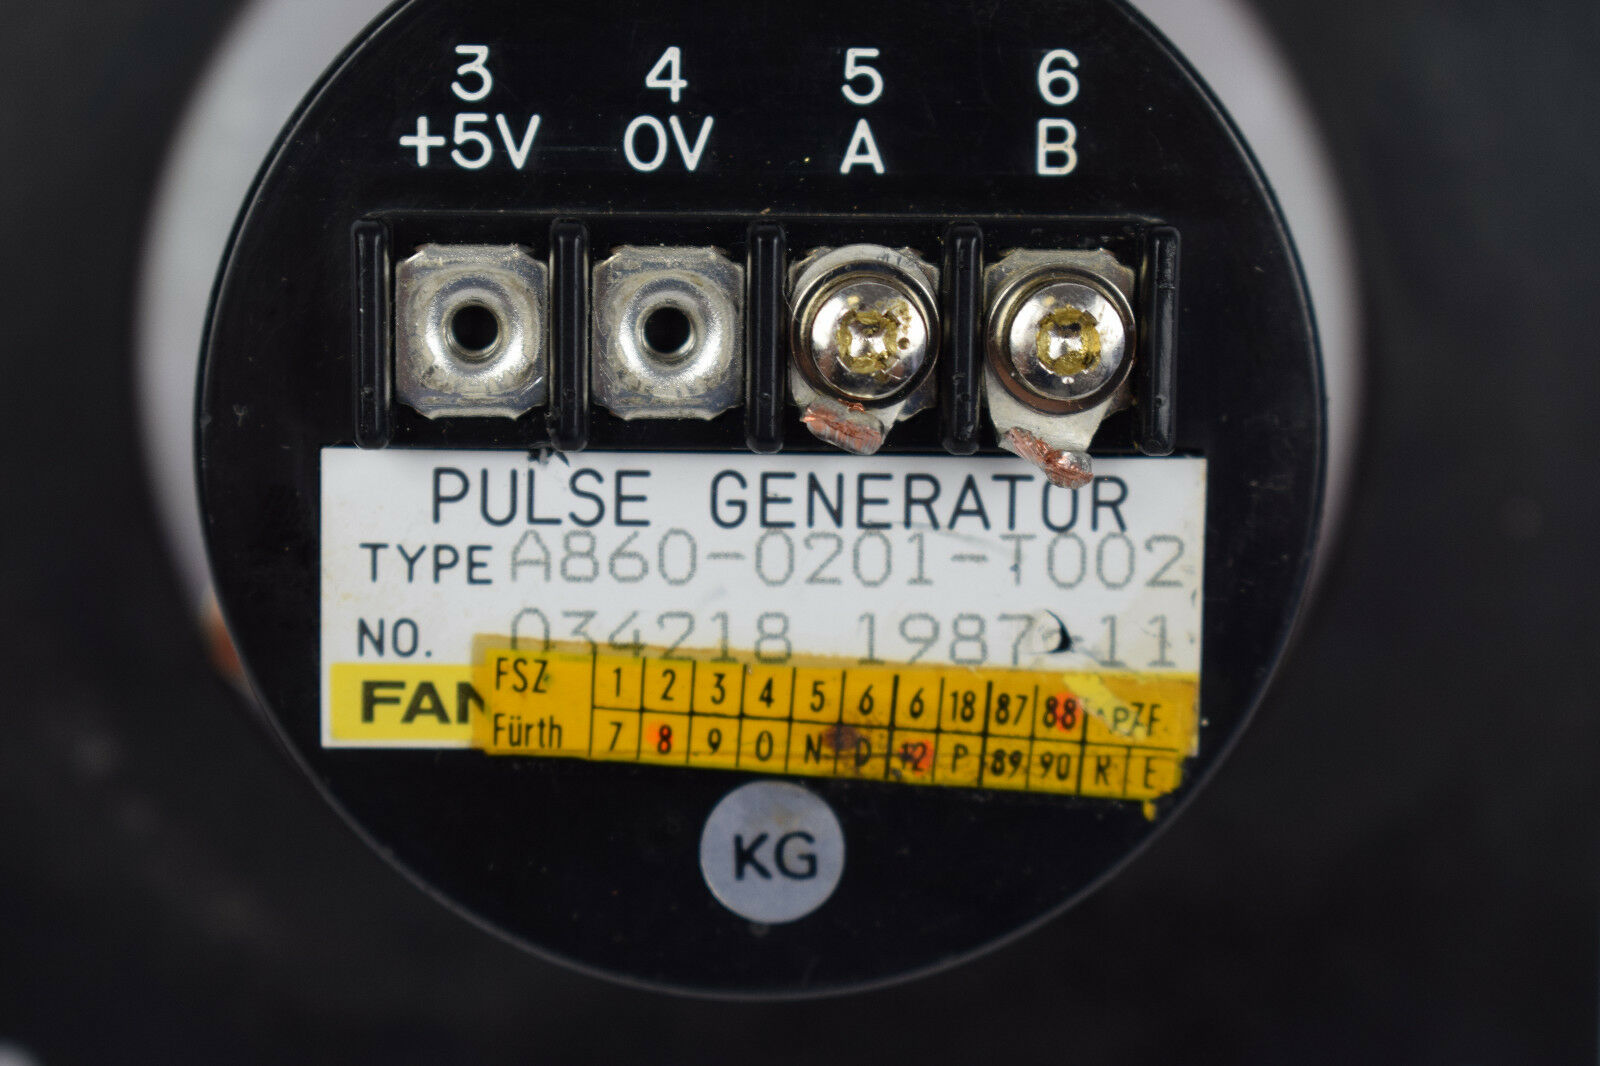 Fanuc Ltd Pulse Generator A860-0201-T002